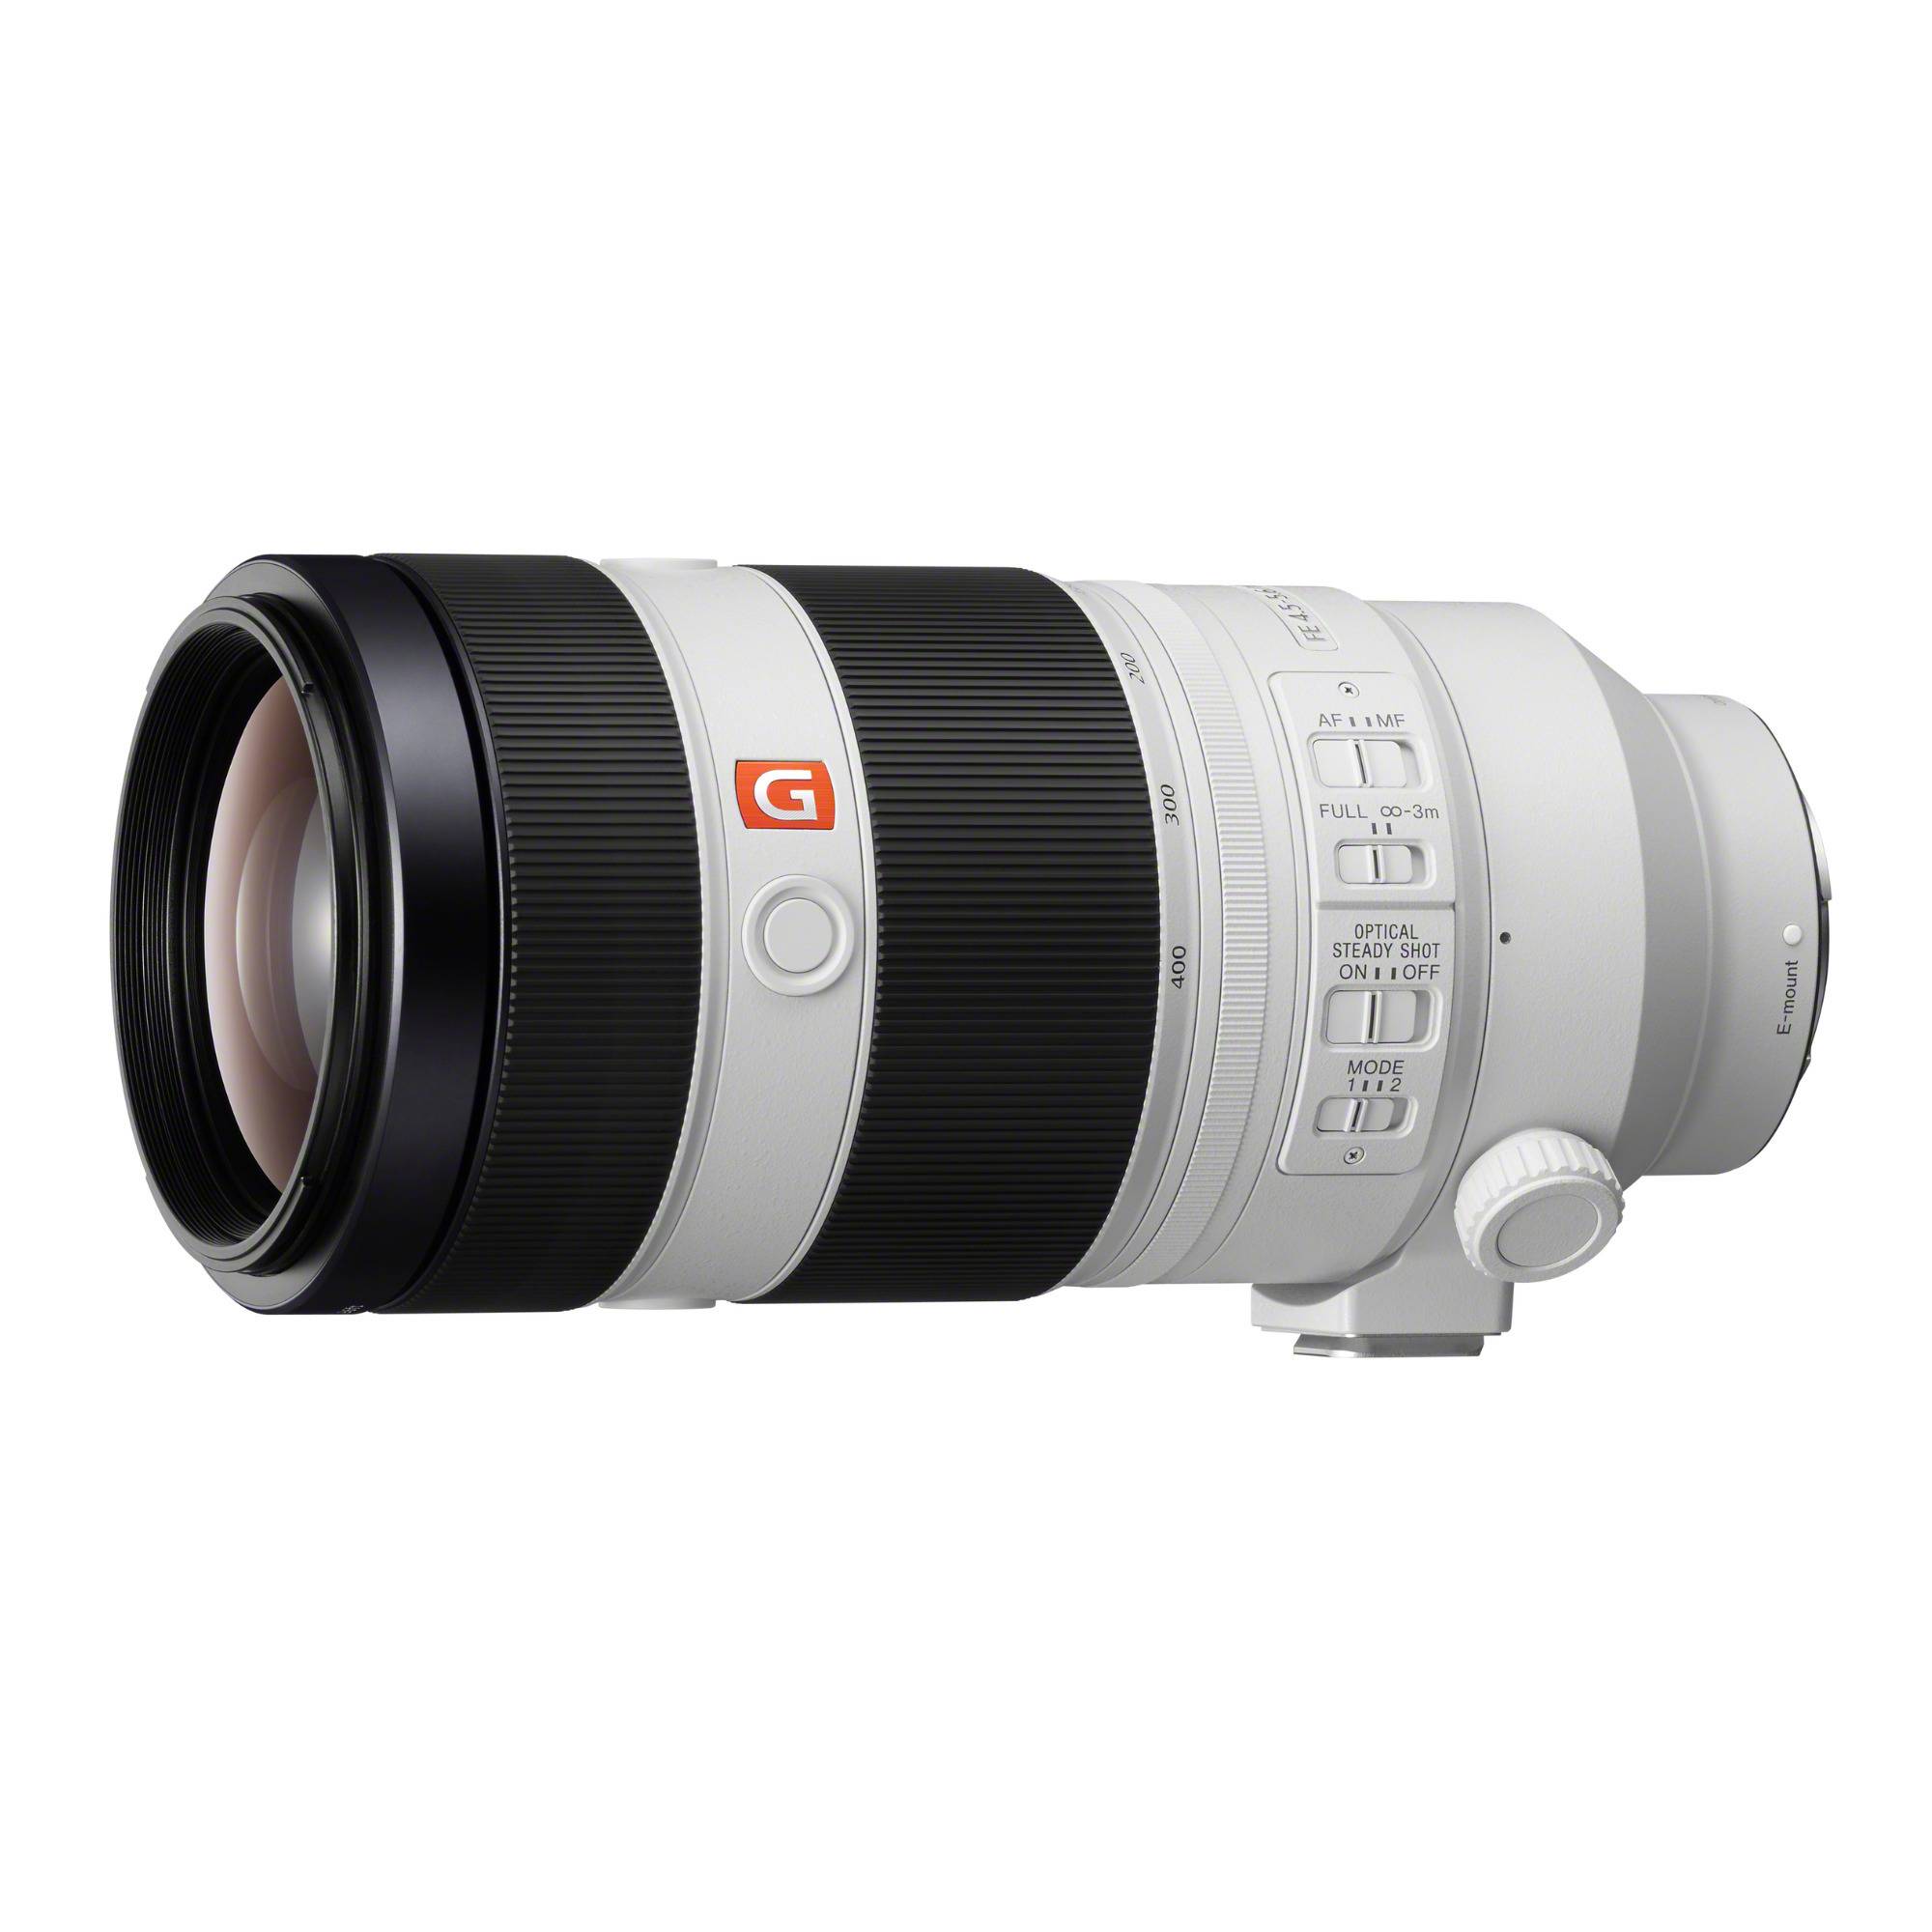 Sony Alpha FE 100-400mm f/4.5-5.6 GM Super Telephoto Zoom Lens